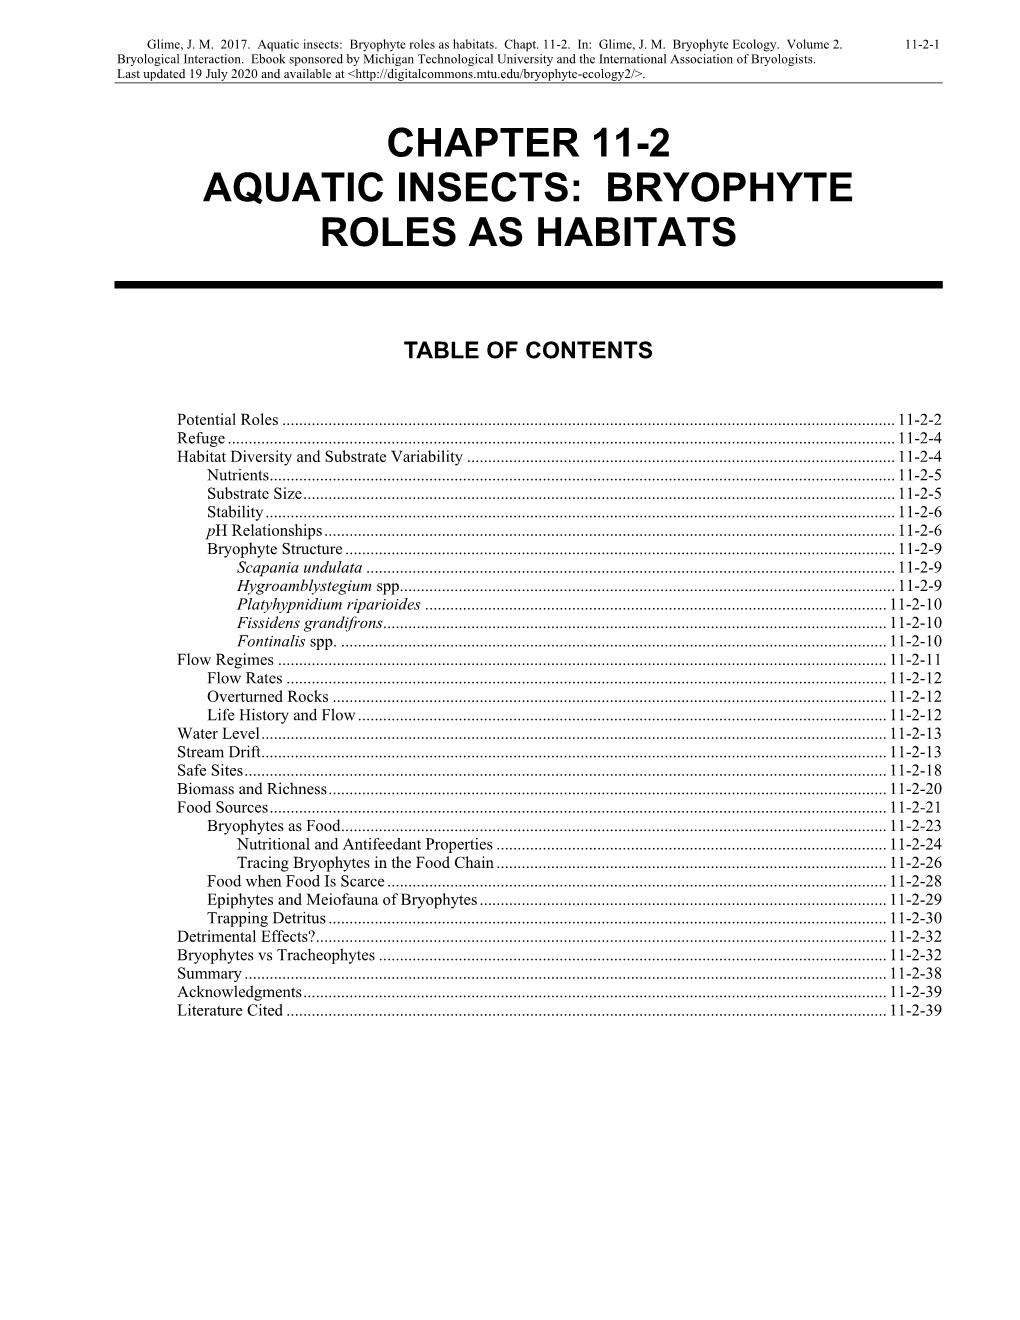 Aquatic Insects: Bryophyte Roles As Habitats